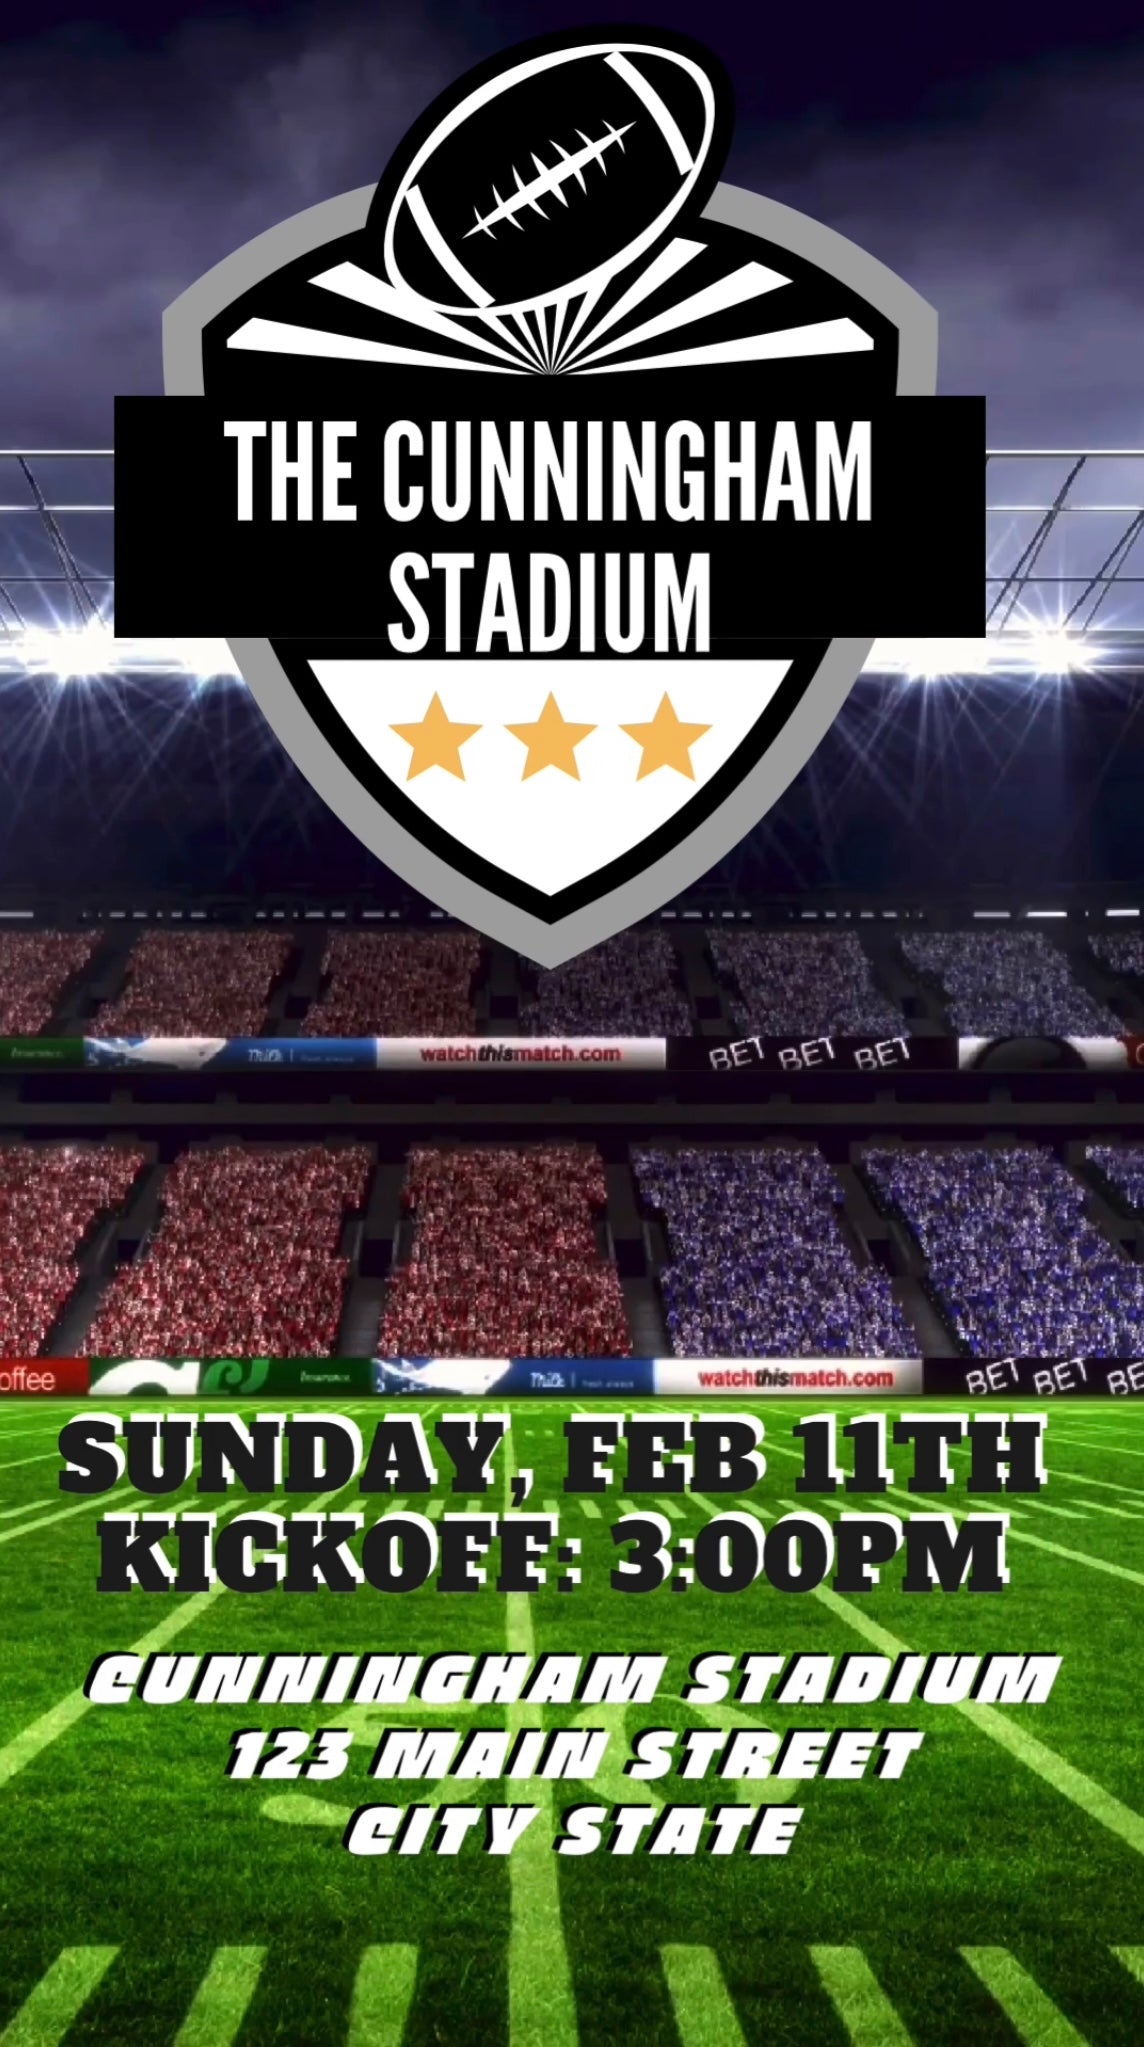 Super Bowl Party Video Invitation, Football Party Invitation